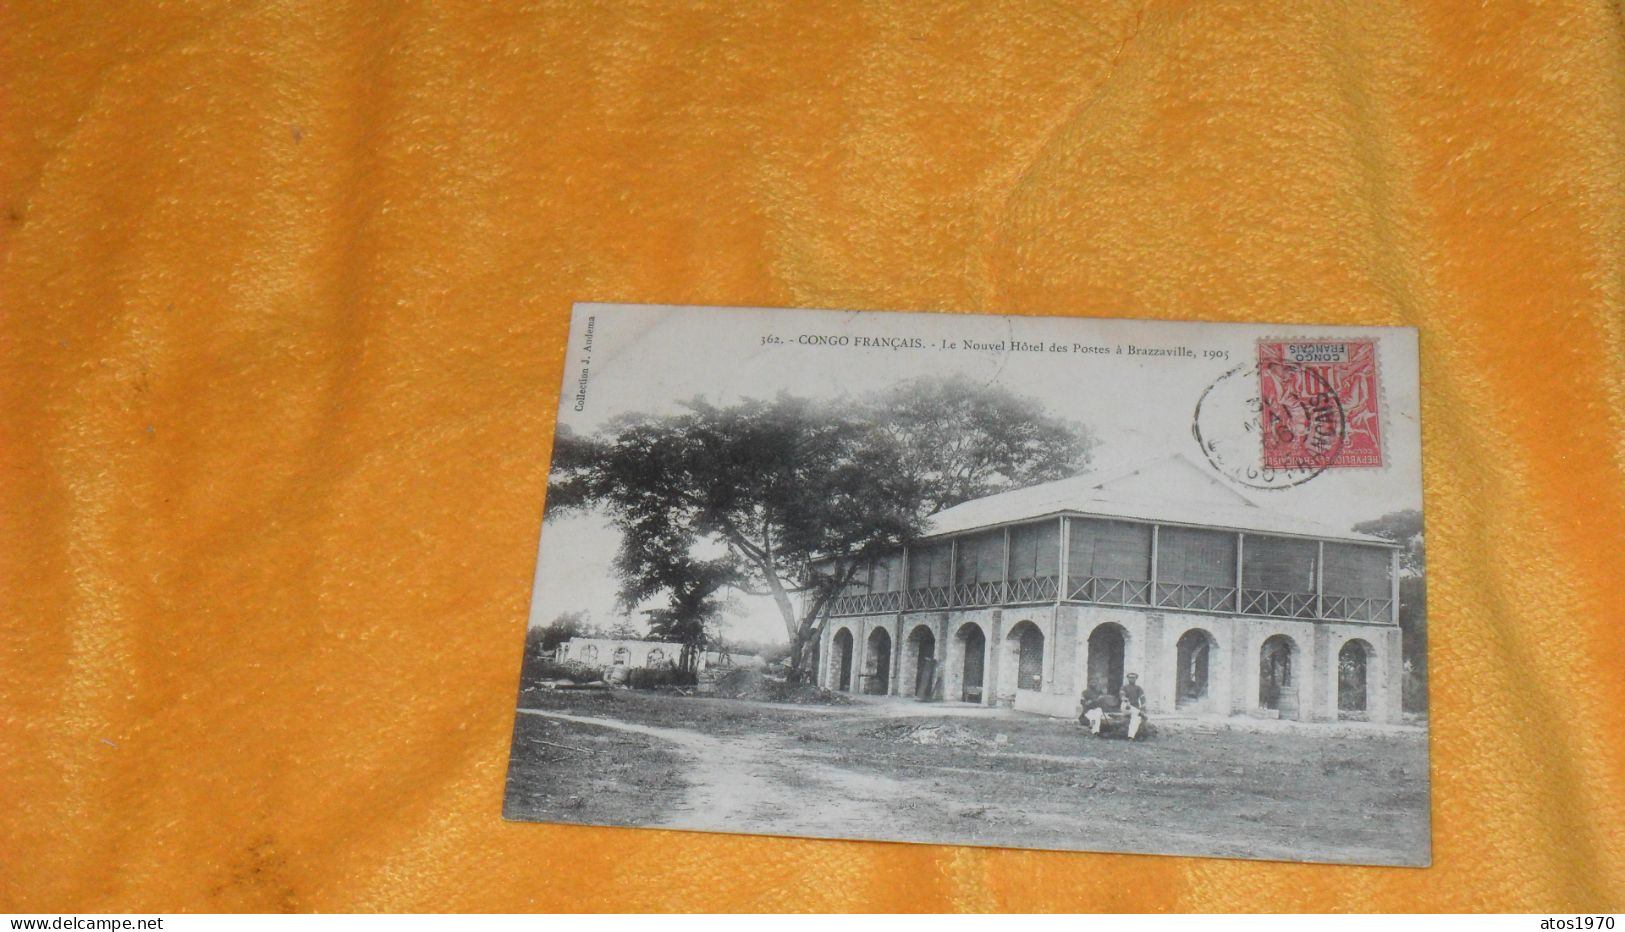 CARTE POSTALE ANCIENNE CIRCULEE DE 1906../ CONGO FRANCAIS.- LE NOUVEL HOTEL DES POSTES A BRAZZAVILLE ...CACHETS + TIMBRE - Congo Français